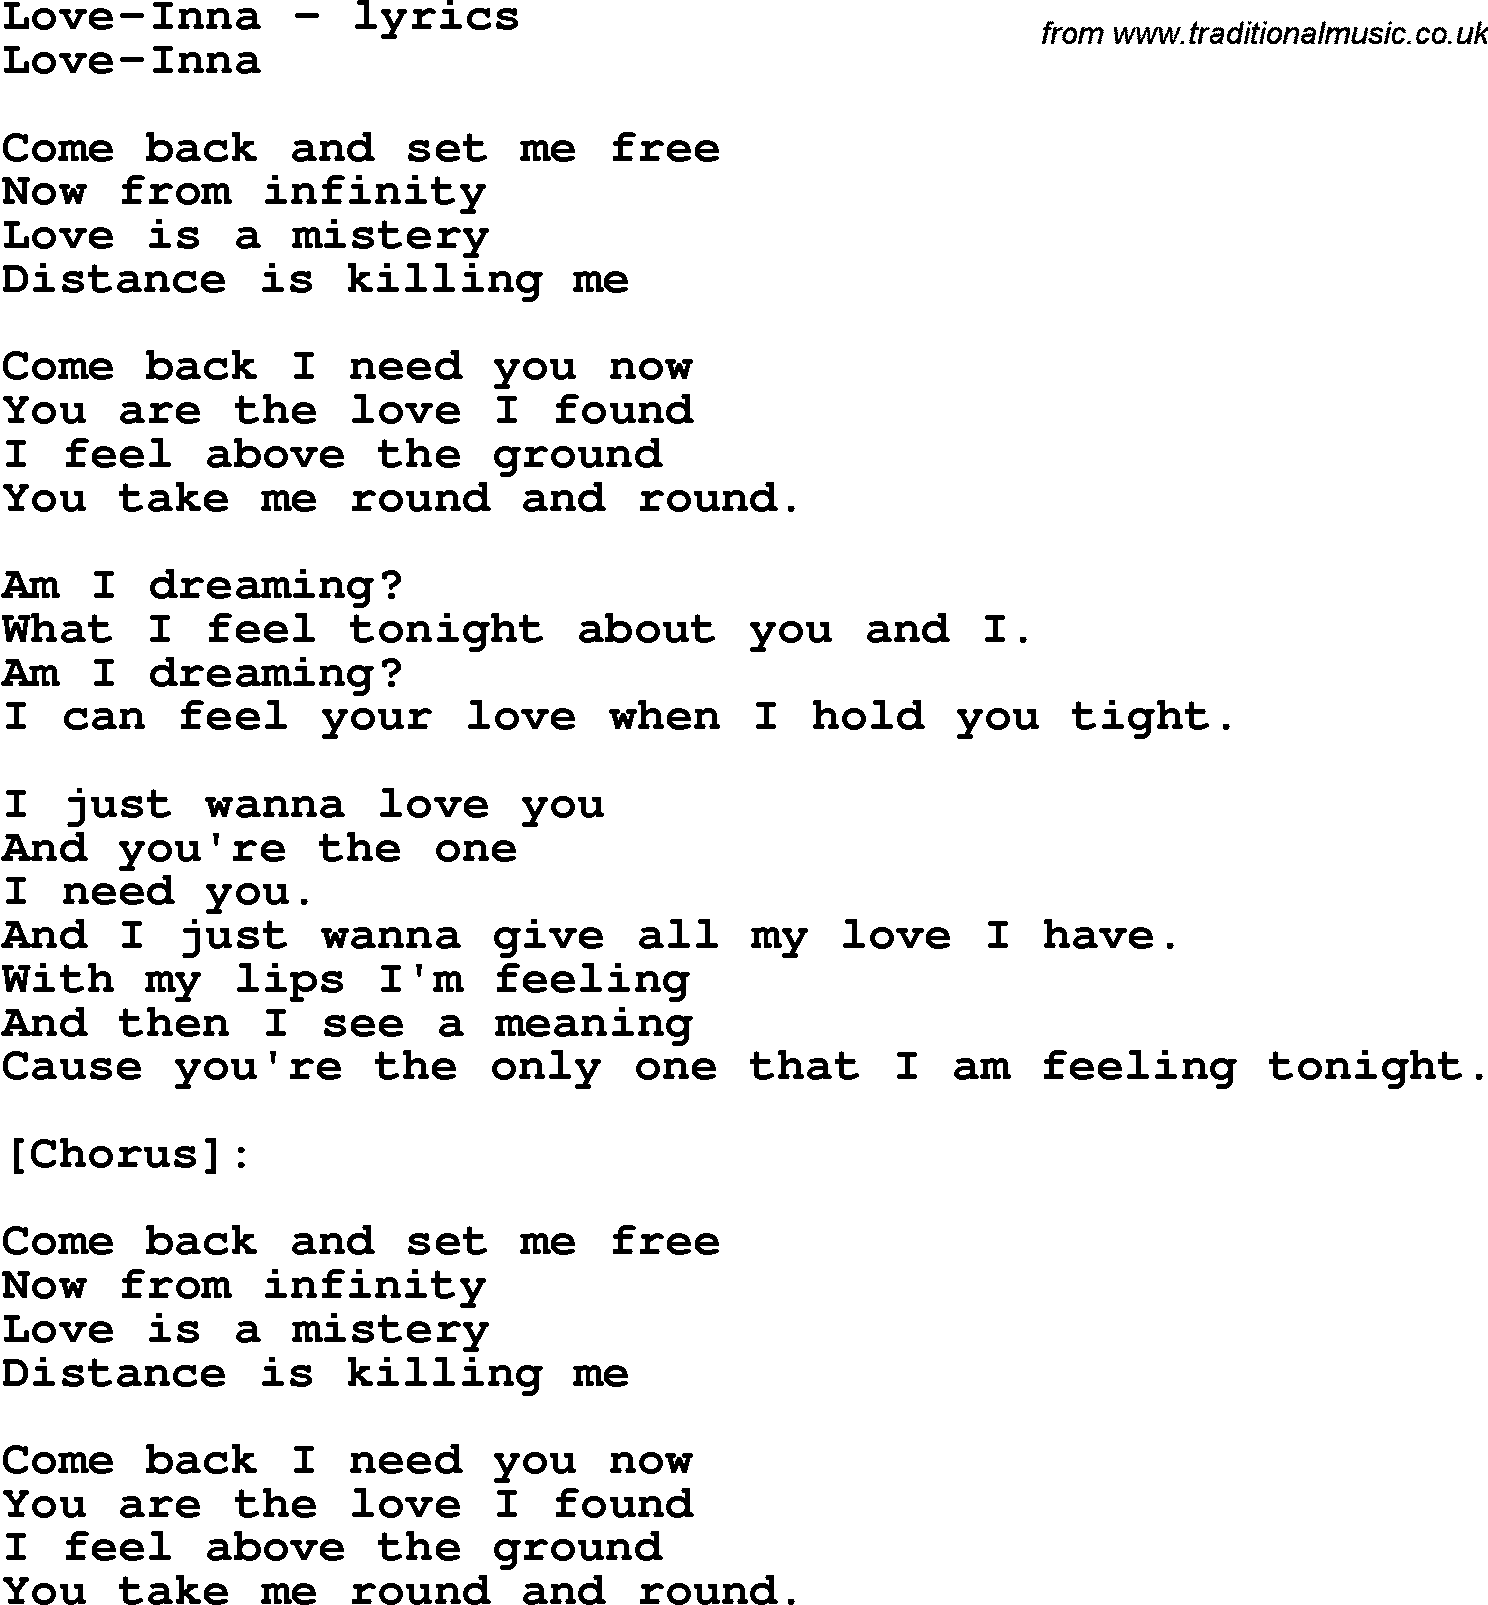 Love Song Lyrics for: Love-Inna